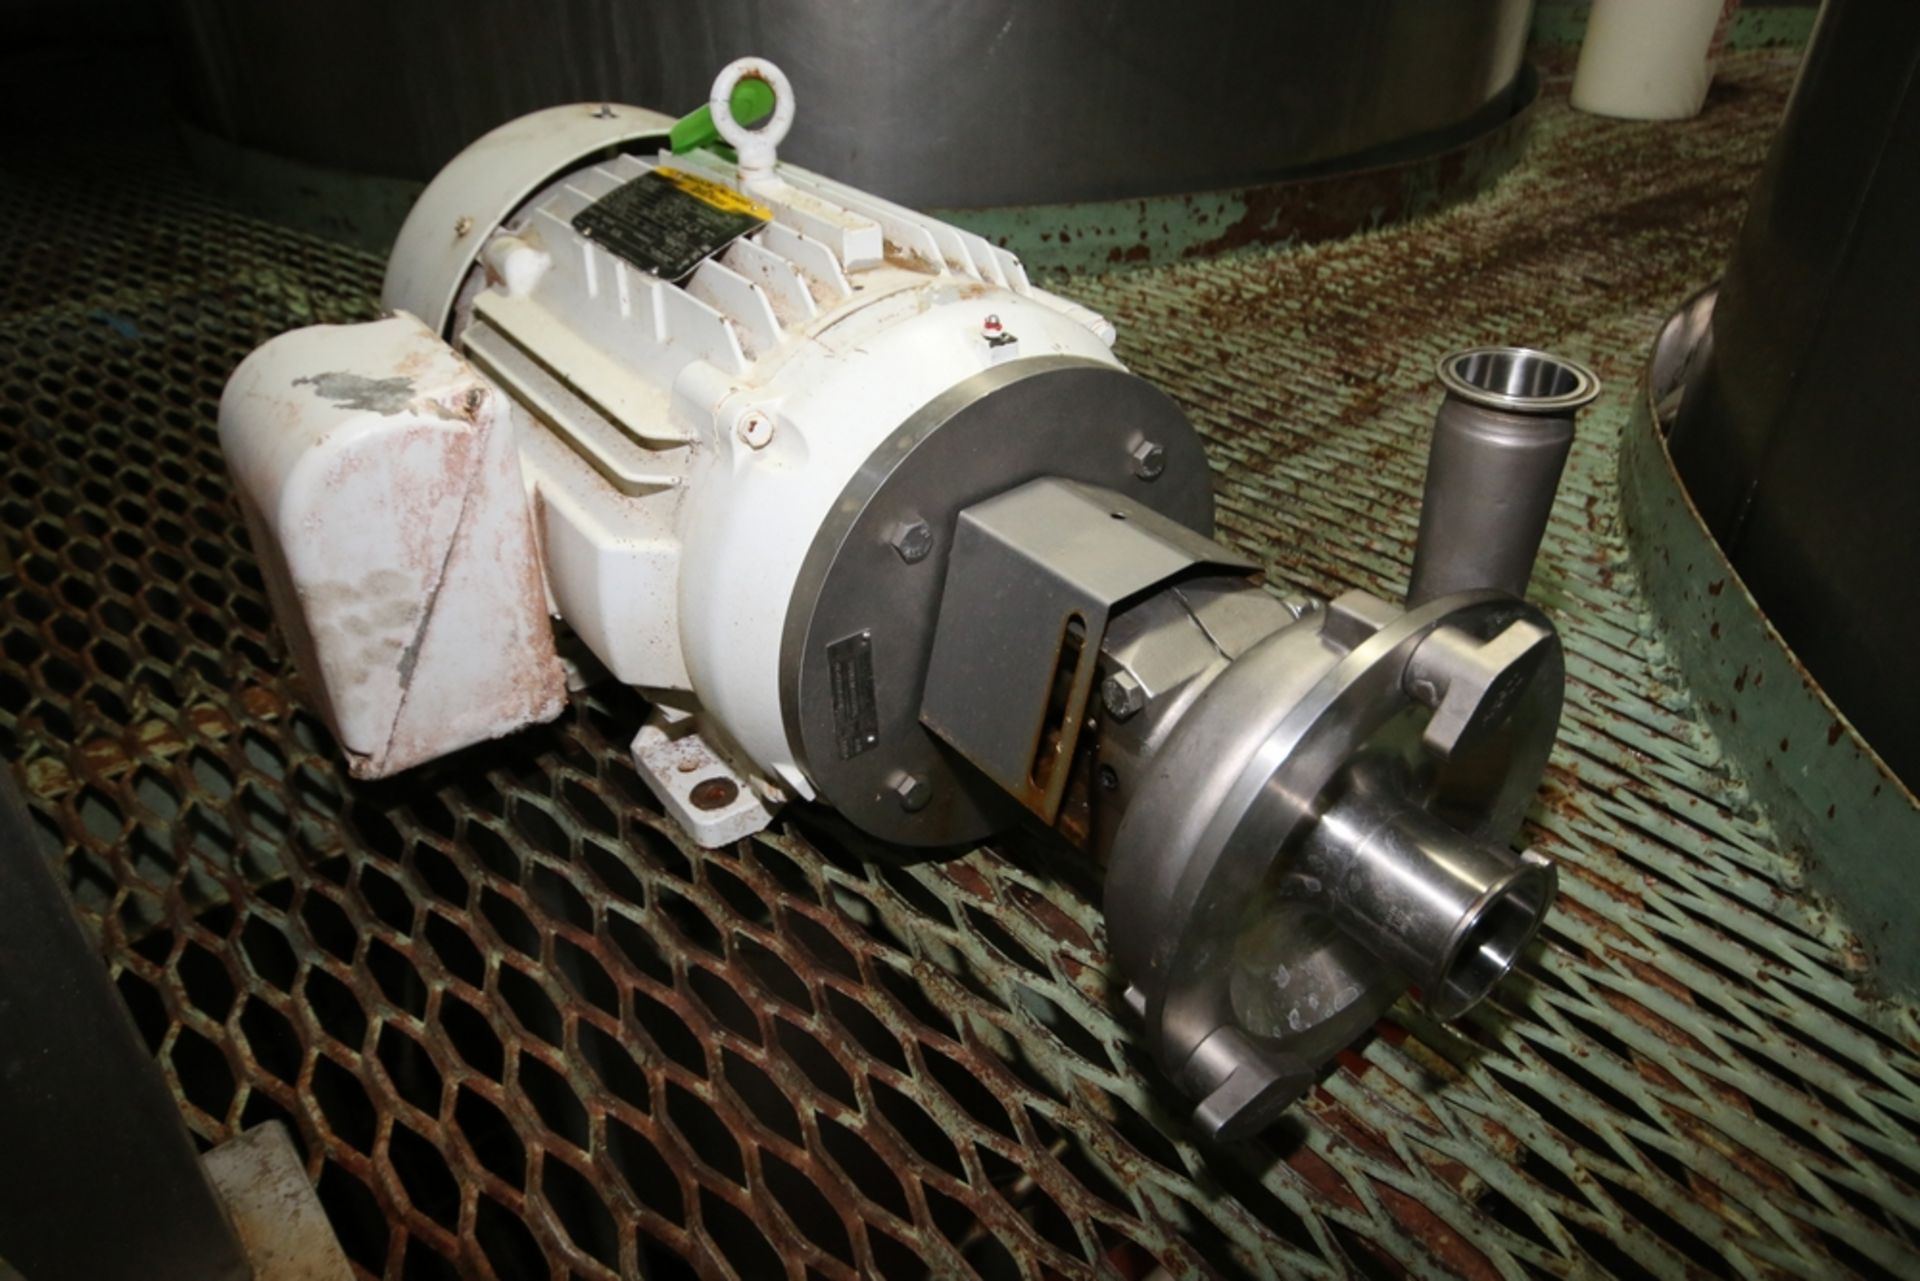 Ampco 30 hp High Shear Pump, M/N SBIV530-252-28, S/N CC-97860-1-1, with Baldor 3520 RPM Motor, 2"